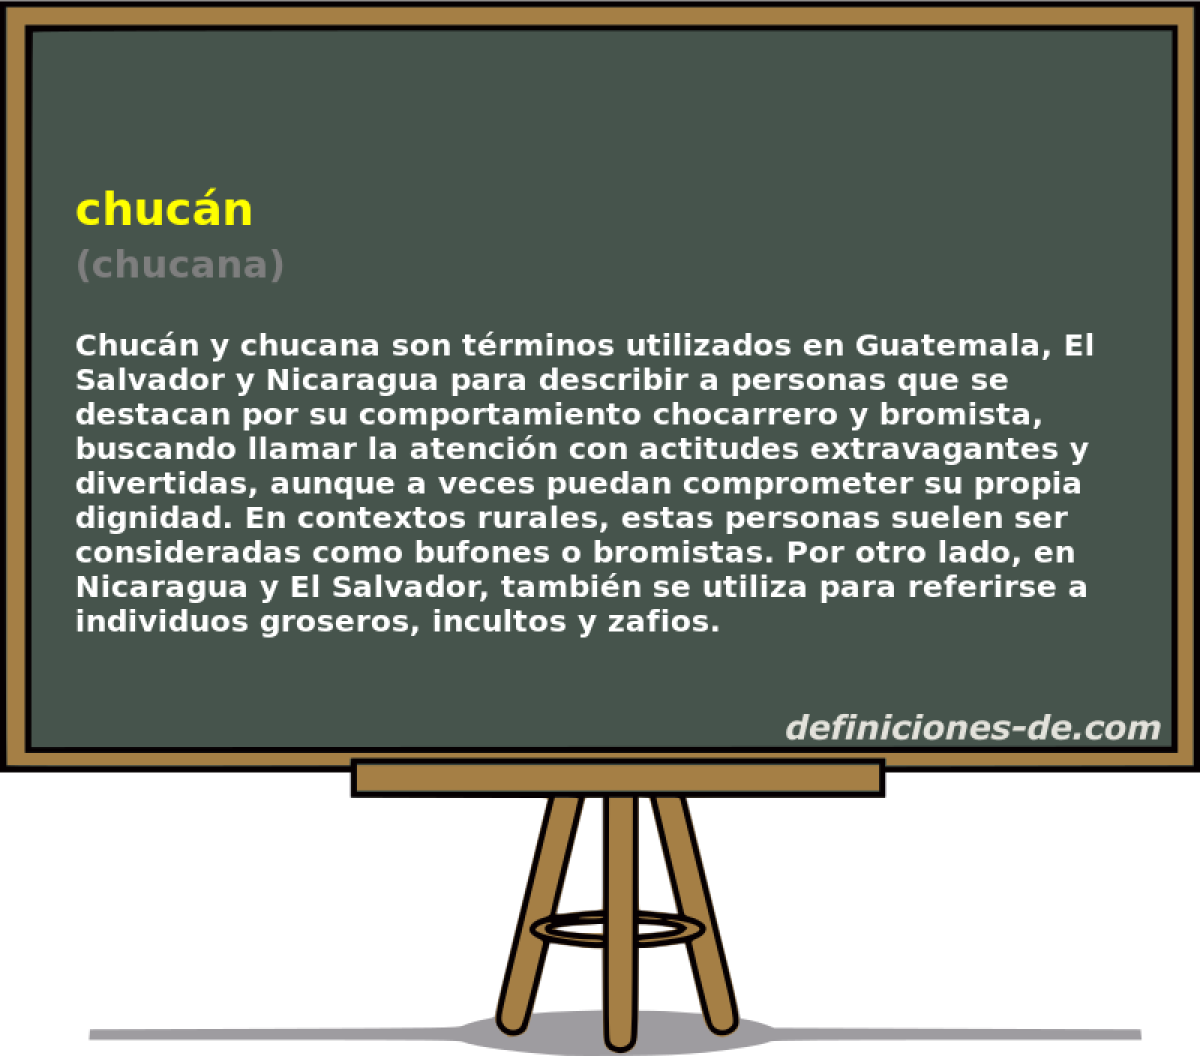 chucn (chucana)